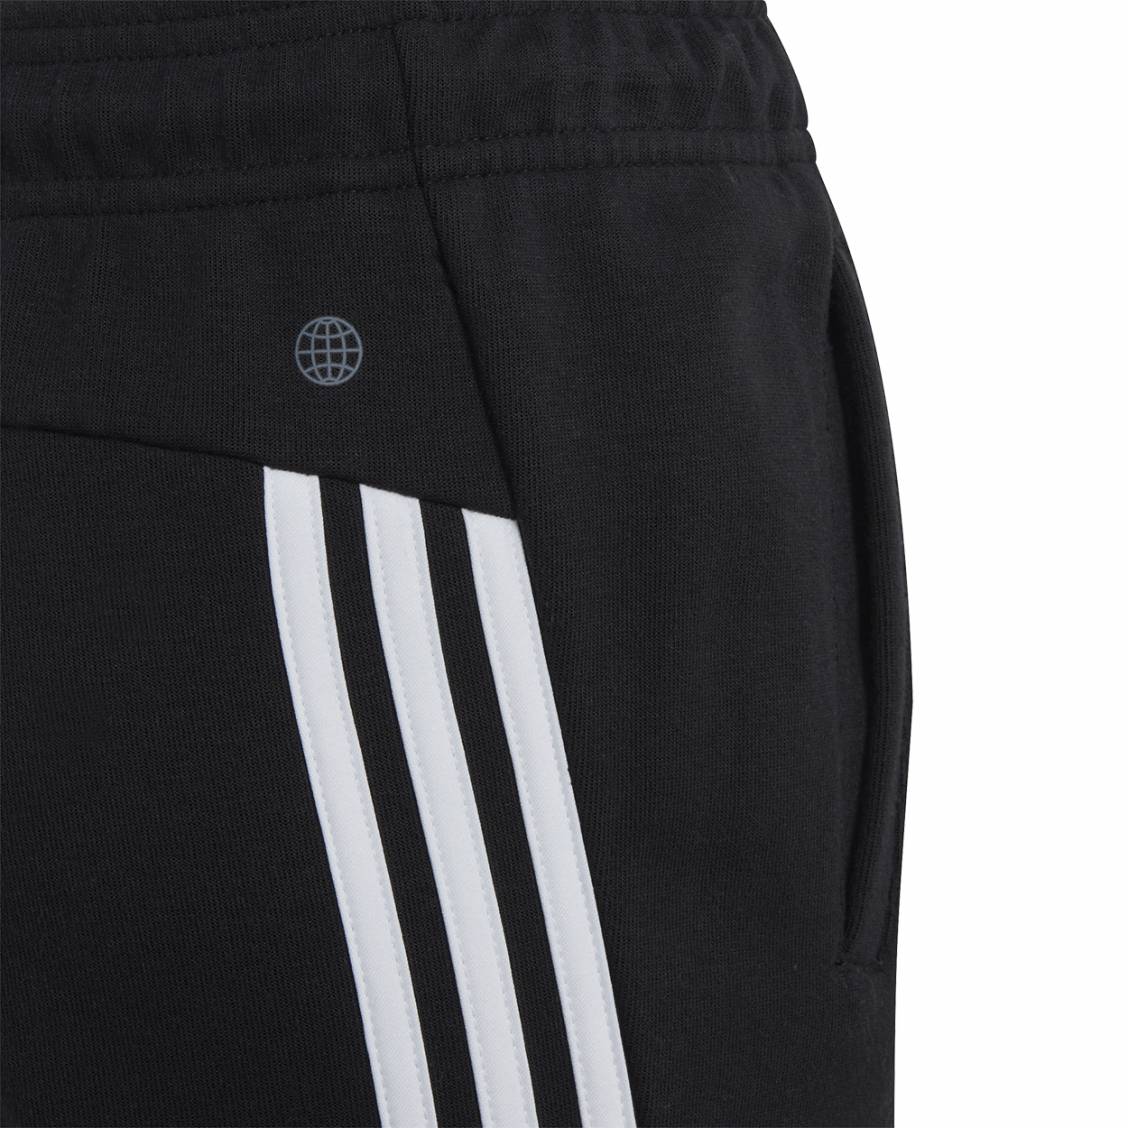 Pantalon de training base noir homme - Adidas